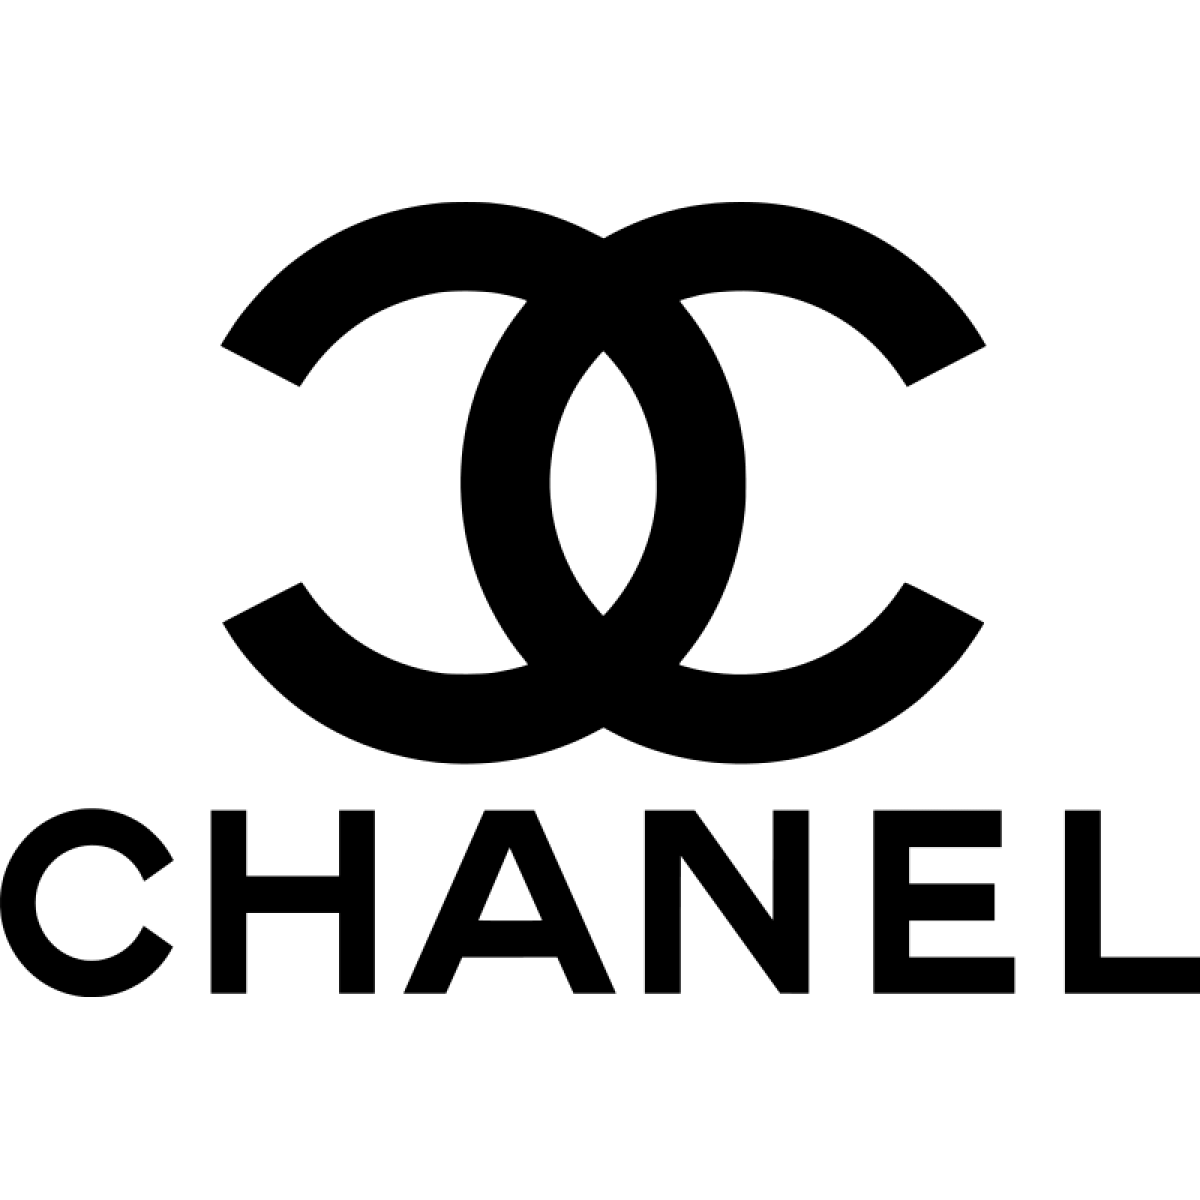 Channel Fashion Logo - channel fashion logo. Chanel logo, Chanel